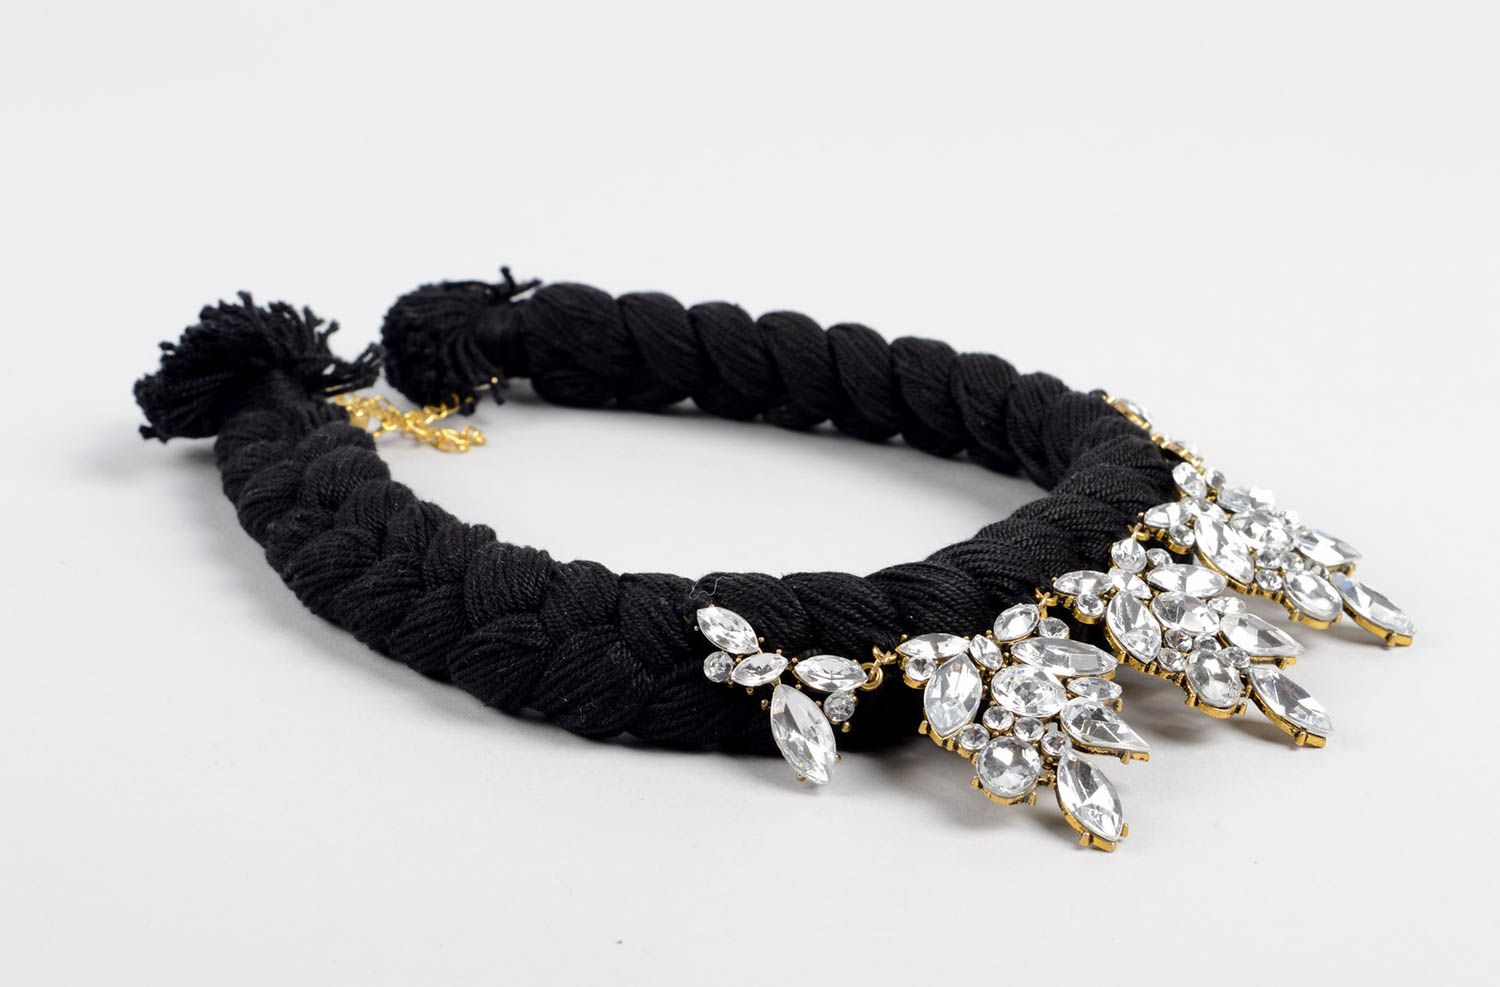 Black elegant necklace textile handmade necklace stylish accessory present photo 1